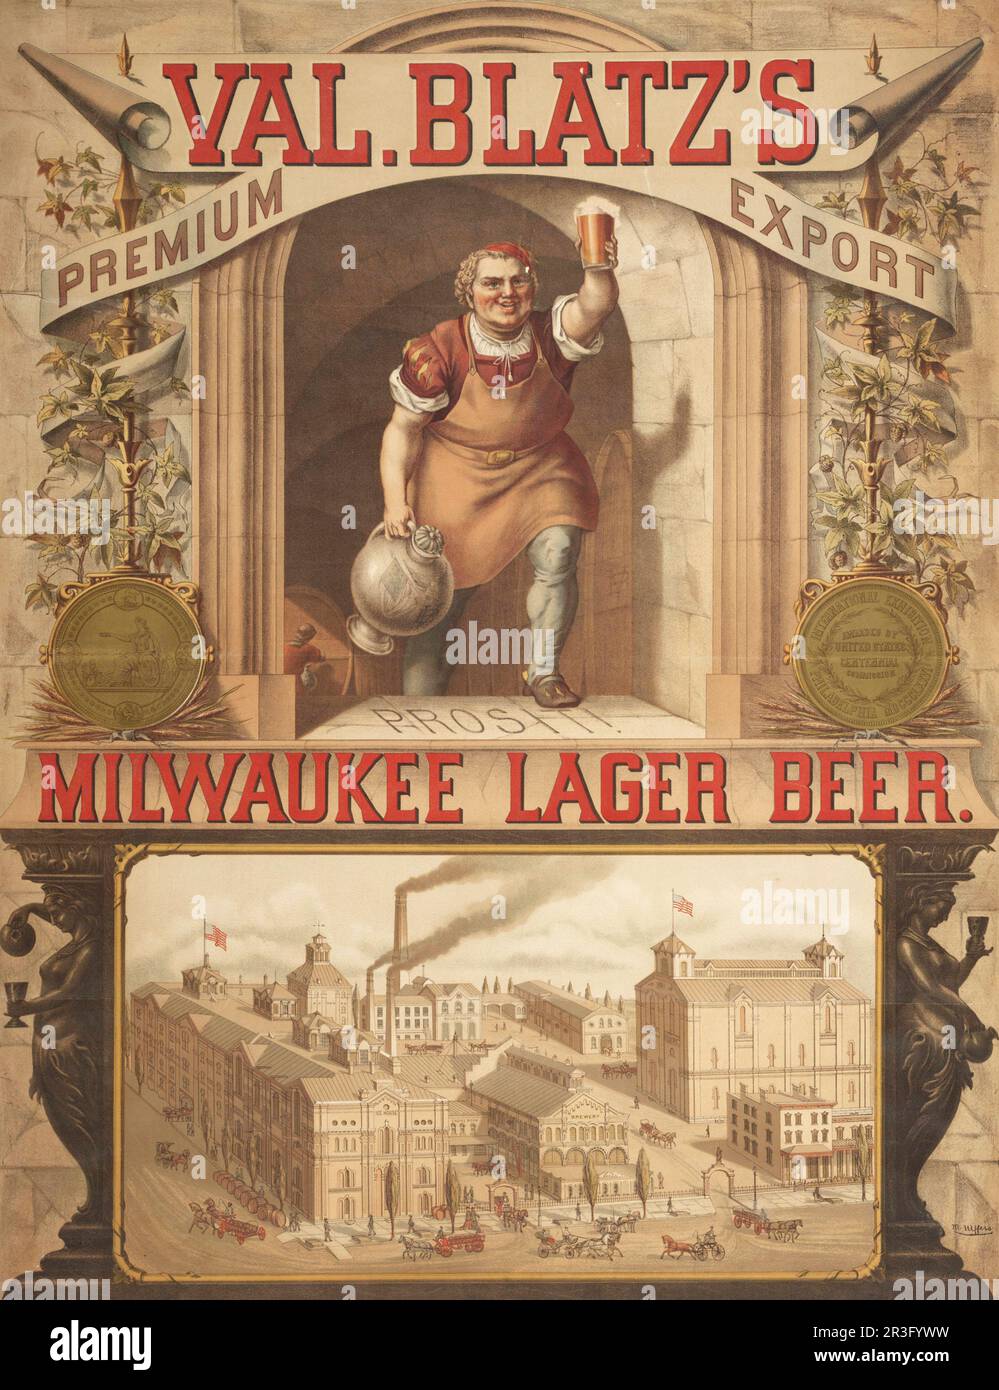 Annuncio vintage per Val. Blatz esportano birra Milwaukee lager premium. Foto Stock